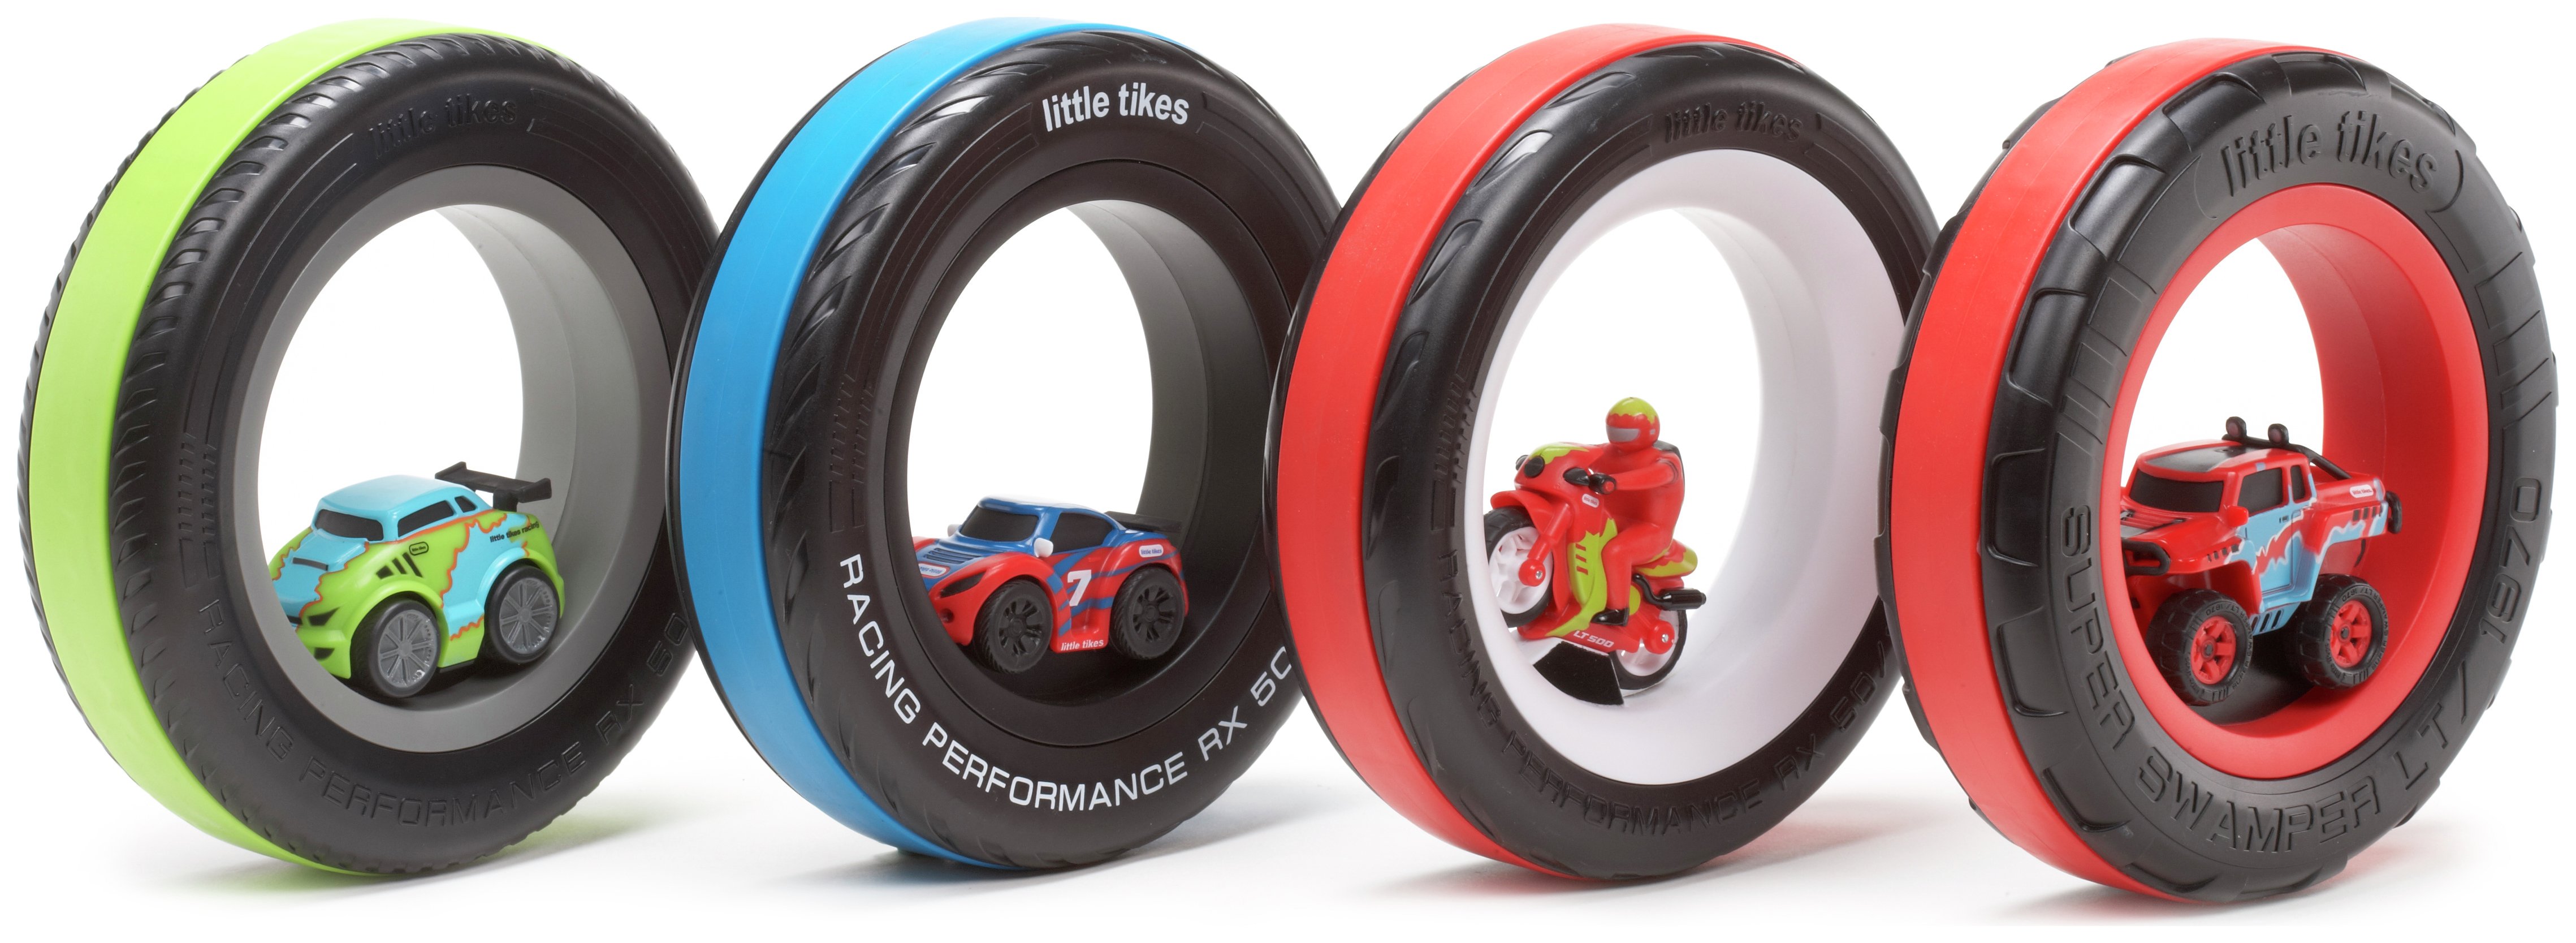 Little Tikes Tyre Racers.